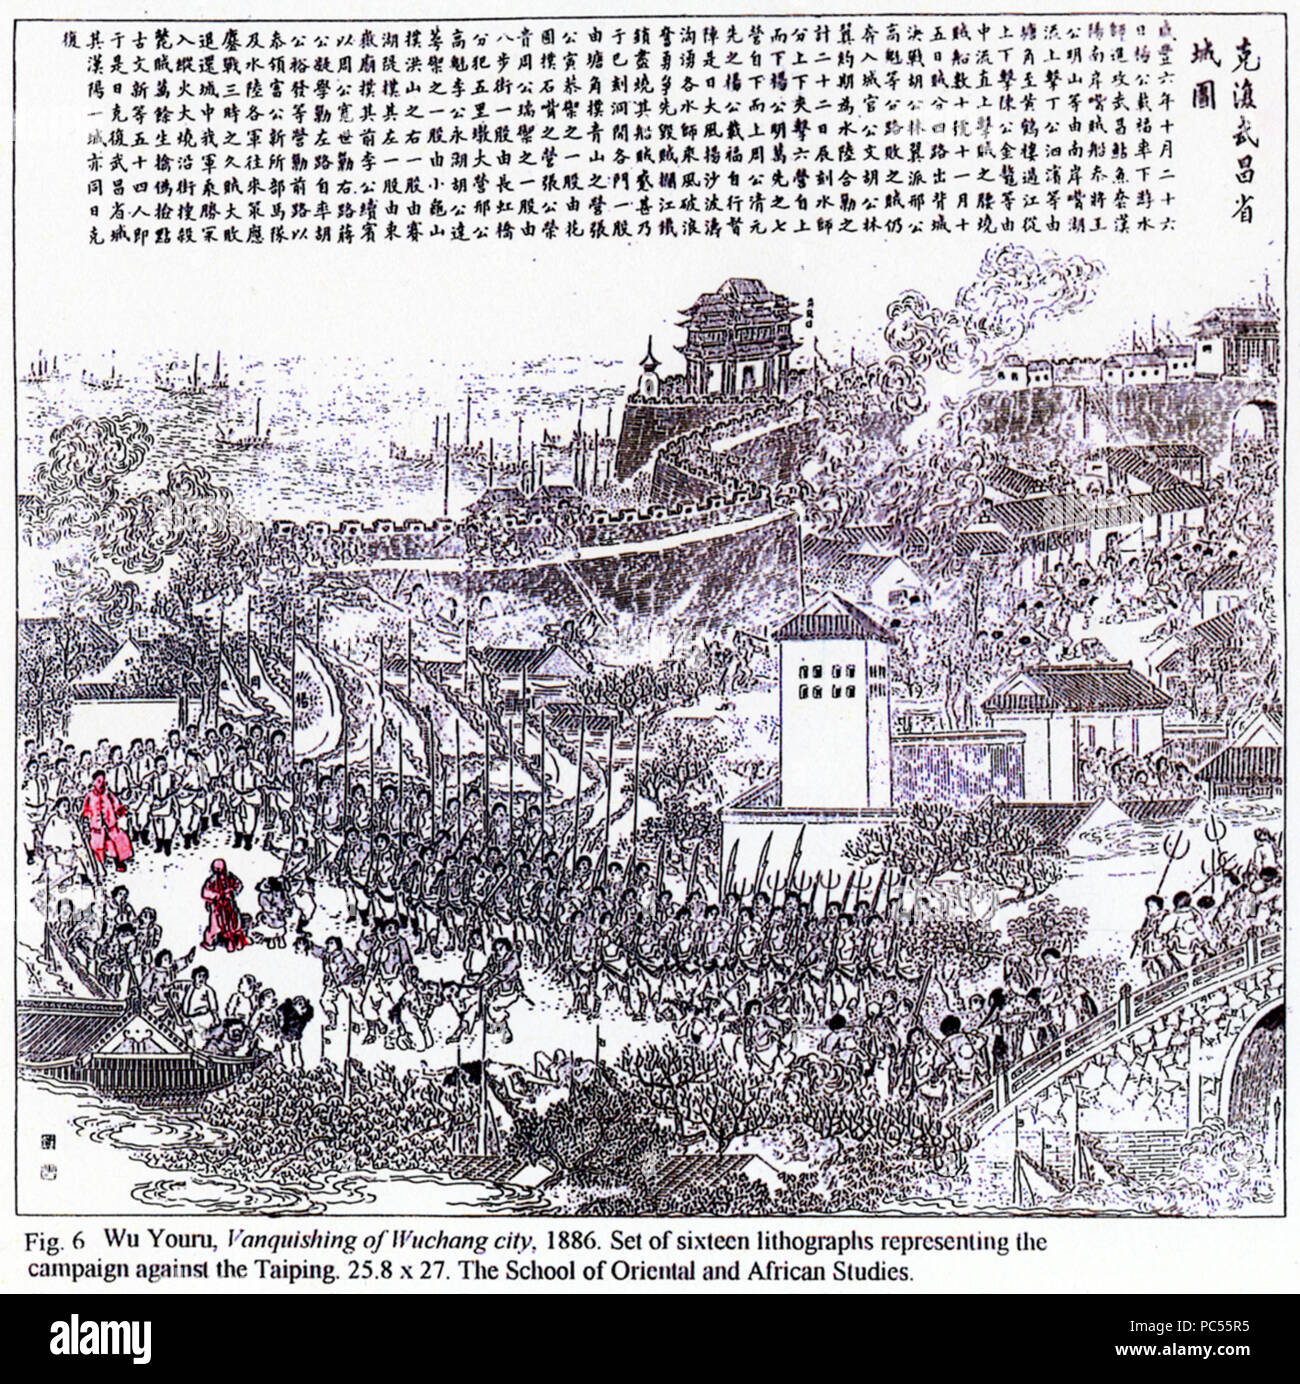 626 Vanquishing of Wuchang city2 Stock Photo